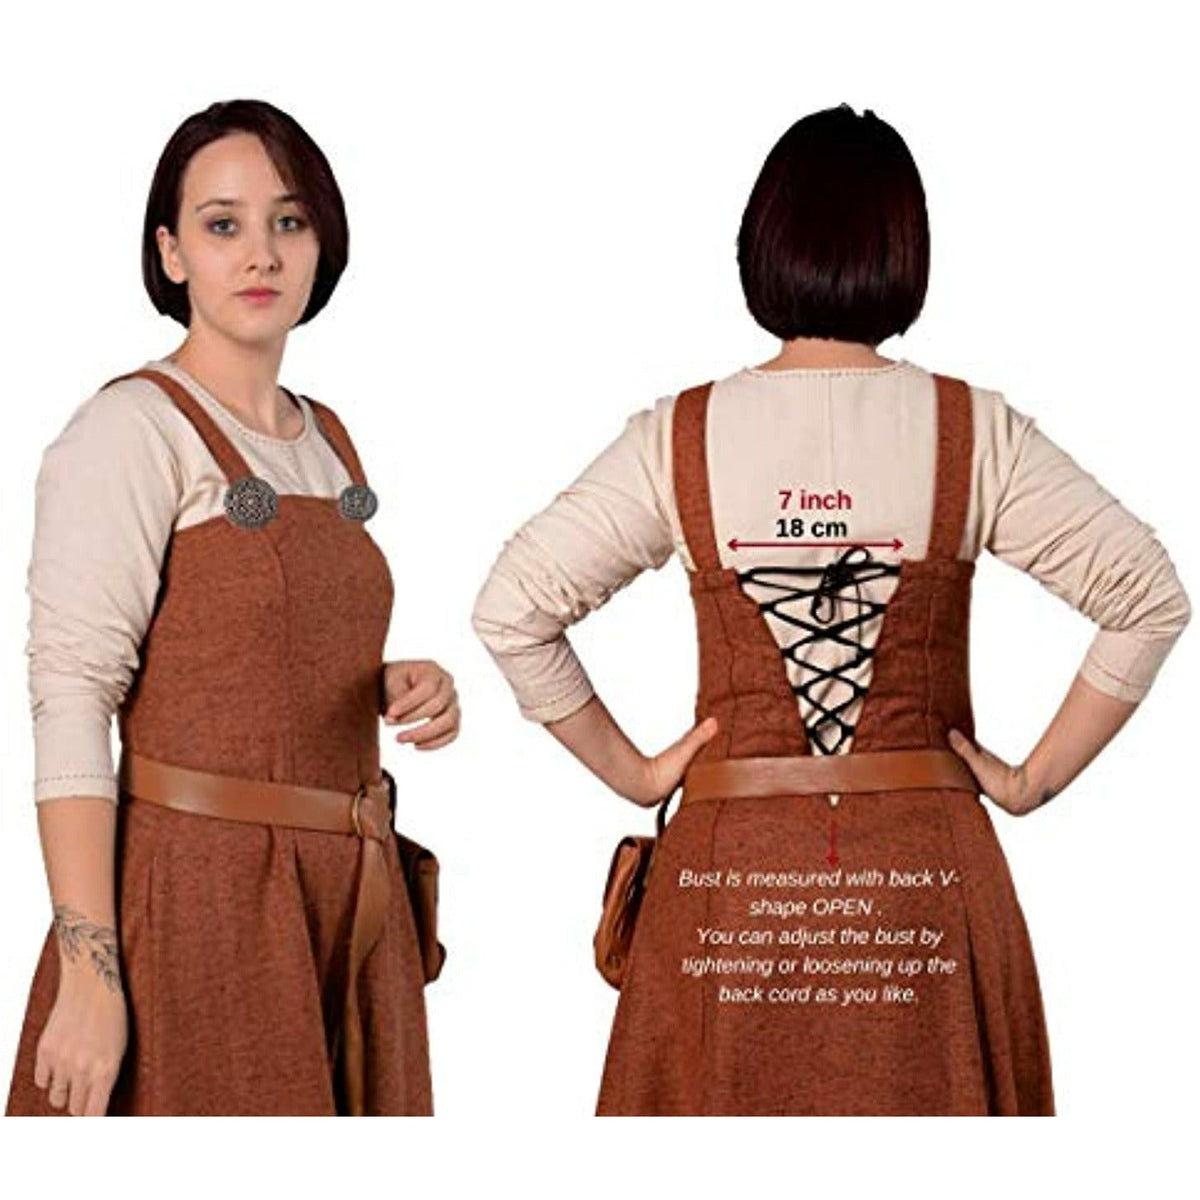 Helga Viking Apron Dress in Wool with Back Laces - Viking Tunic